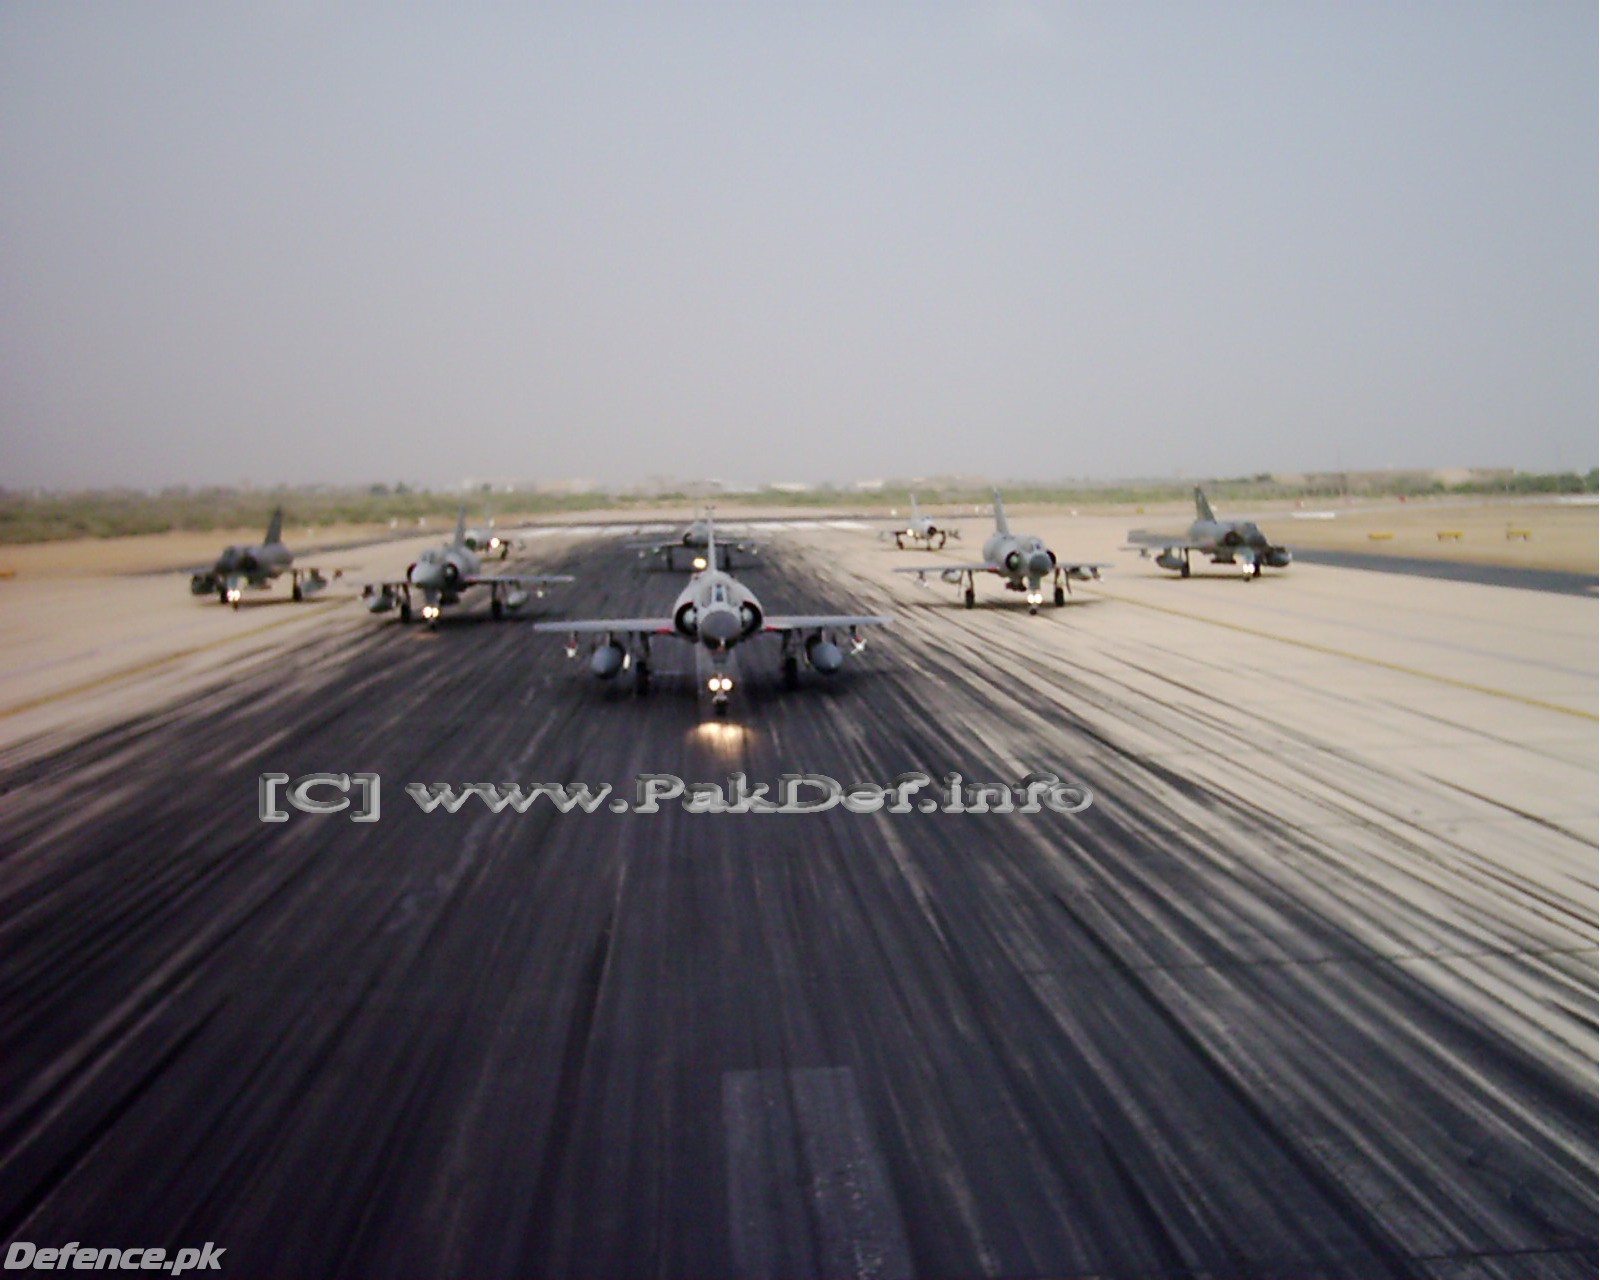 Mirage-IIIs and F-7Ps